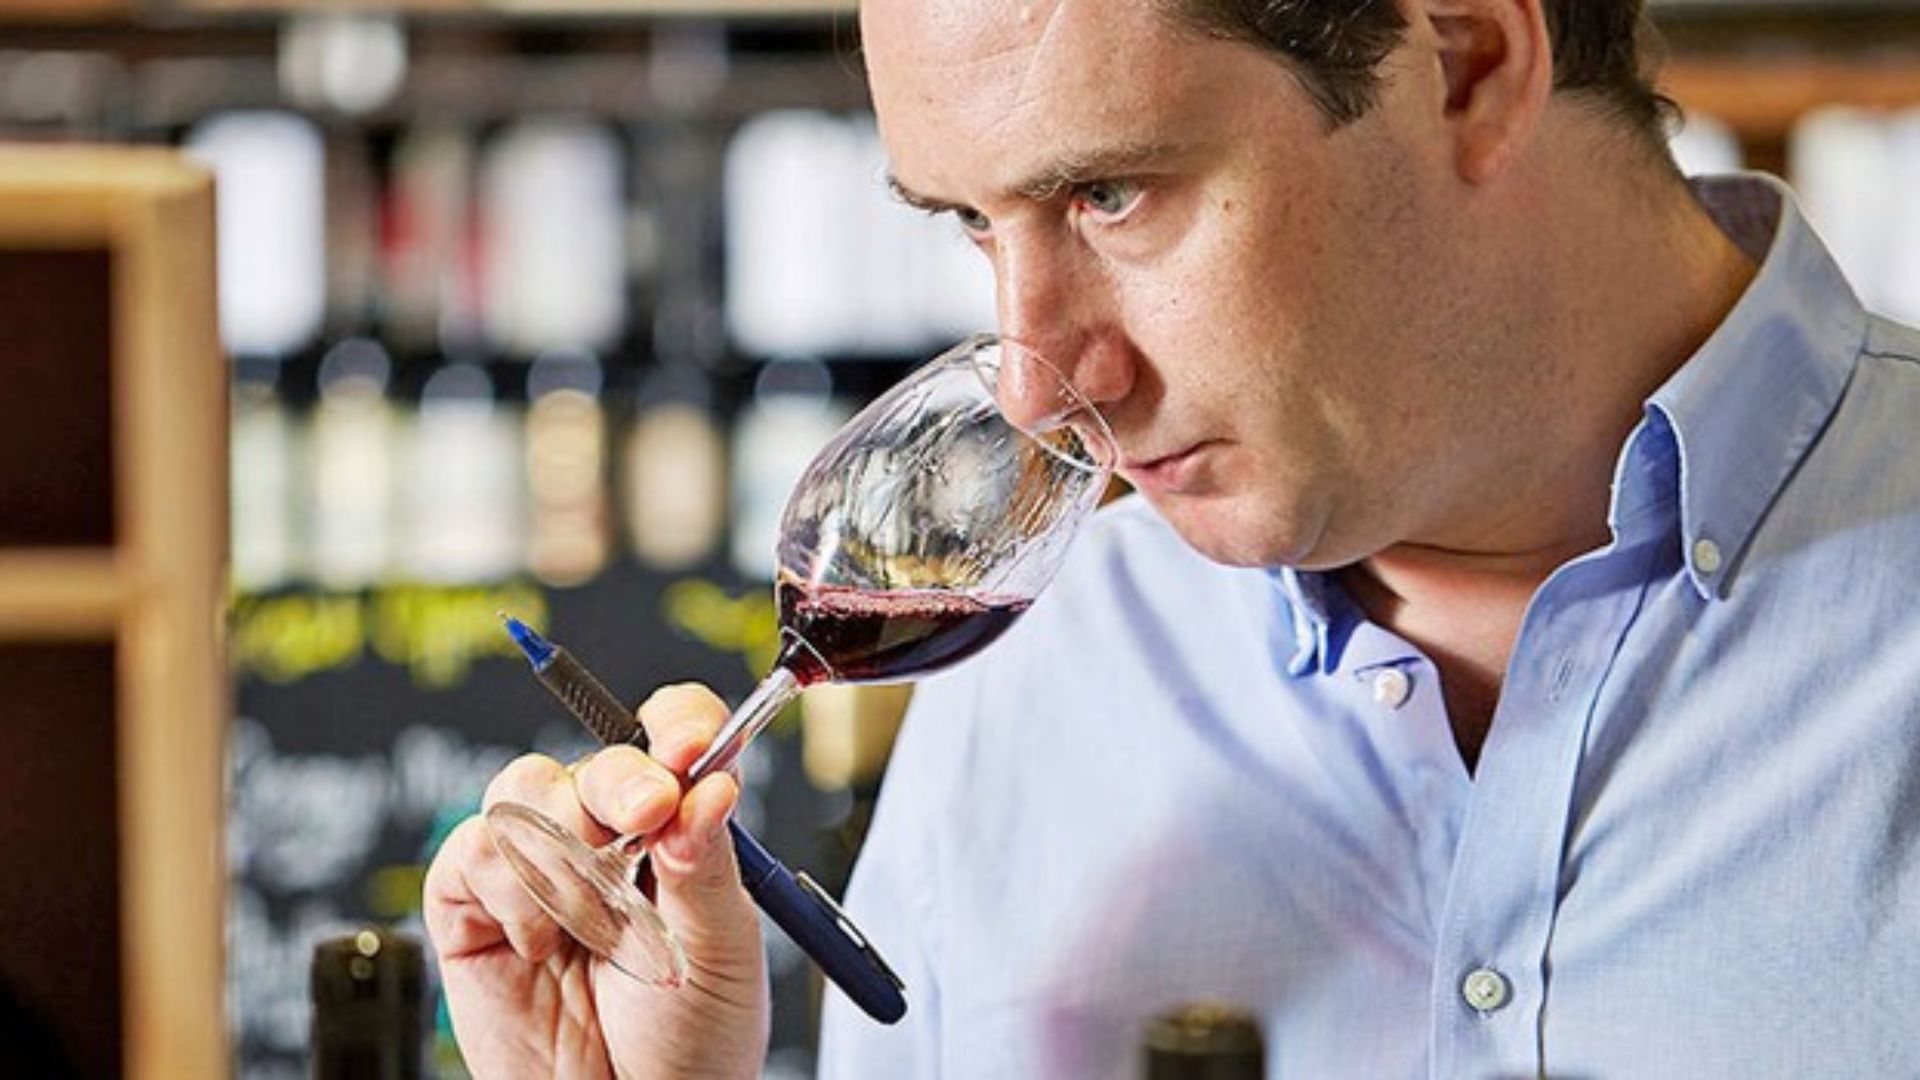 a man tasting wine showing tips to taste wine